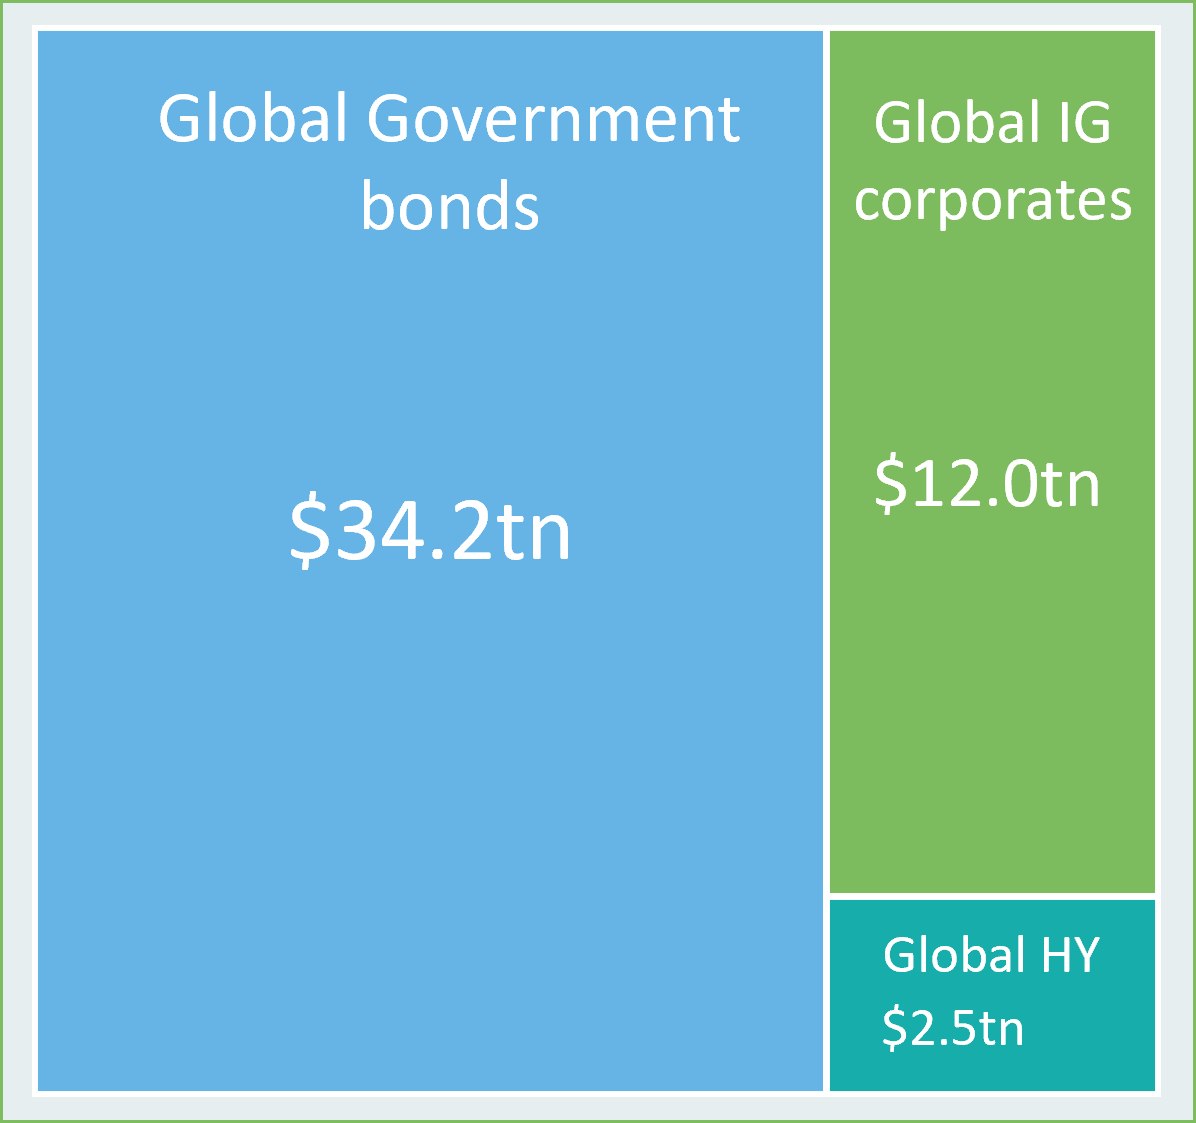 Global Government bonds